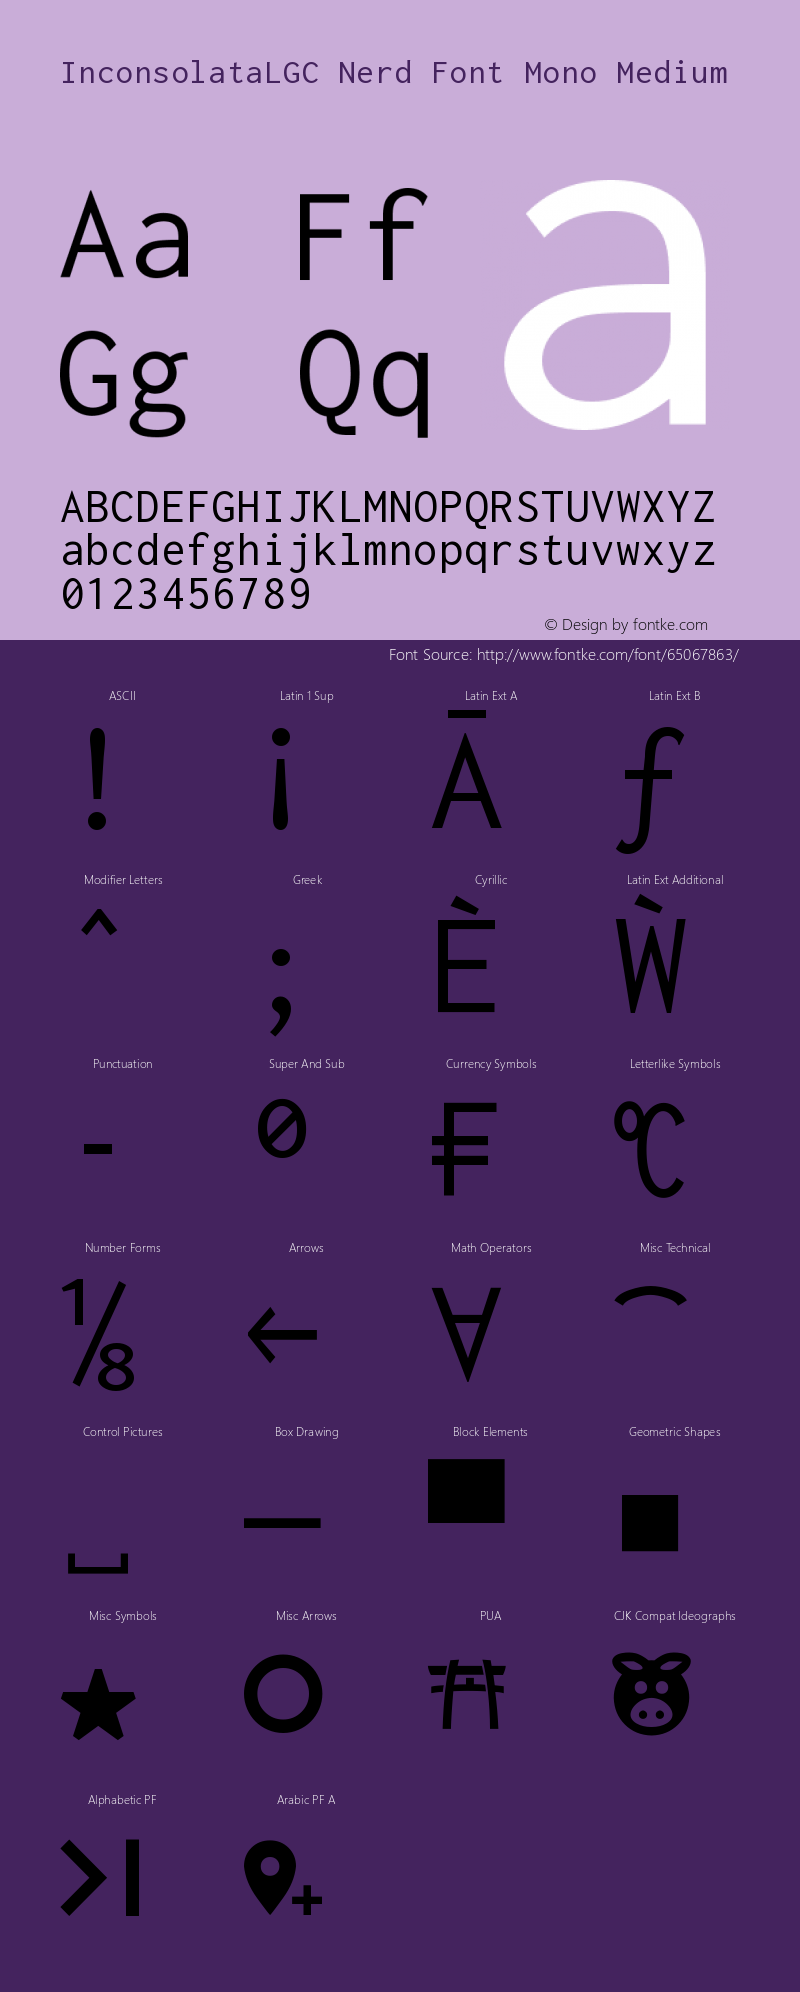 Inconsolata LGC Nerd Font Complete Mono Version 1.3;Nerd Fonts 2.1.0图片样张